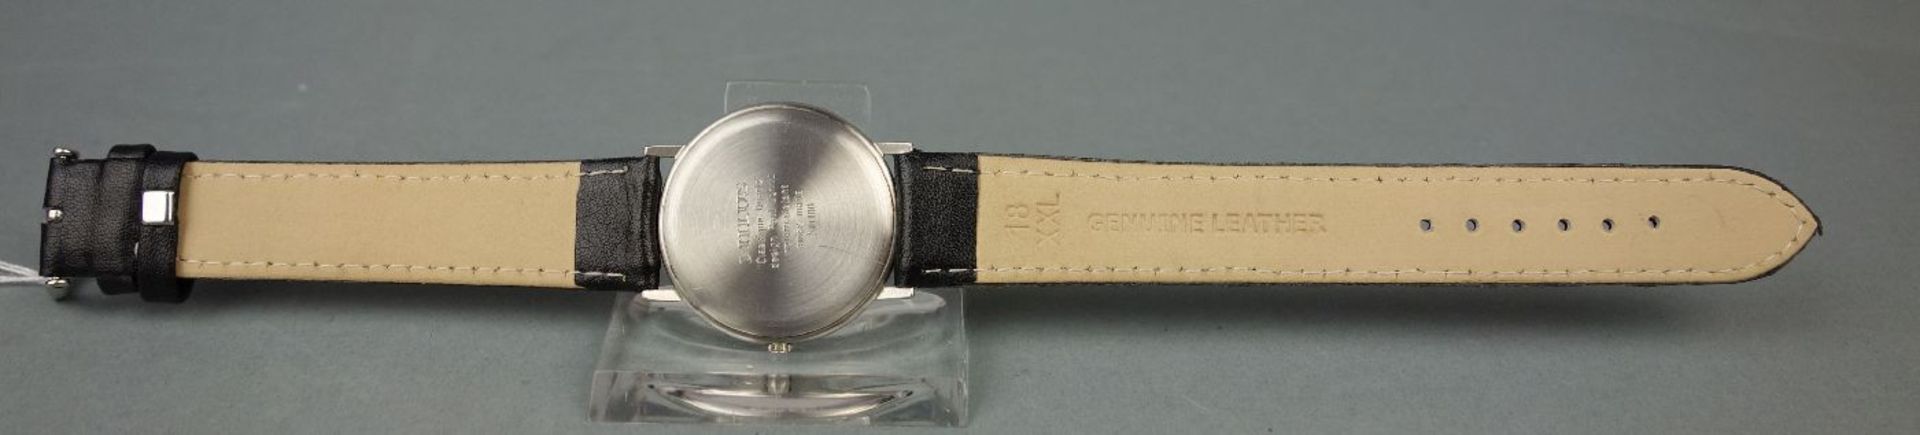 ARMBANDUHR - MILUS / wristwatch, Quartz, Schweiz. Rundes Edelstahlgehäuse an Lederarmband. - Bild 4 aus 5